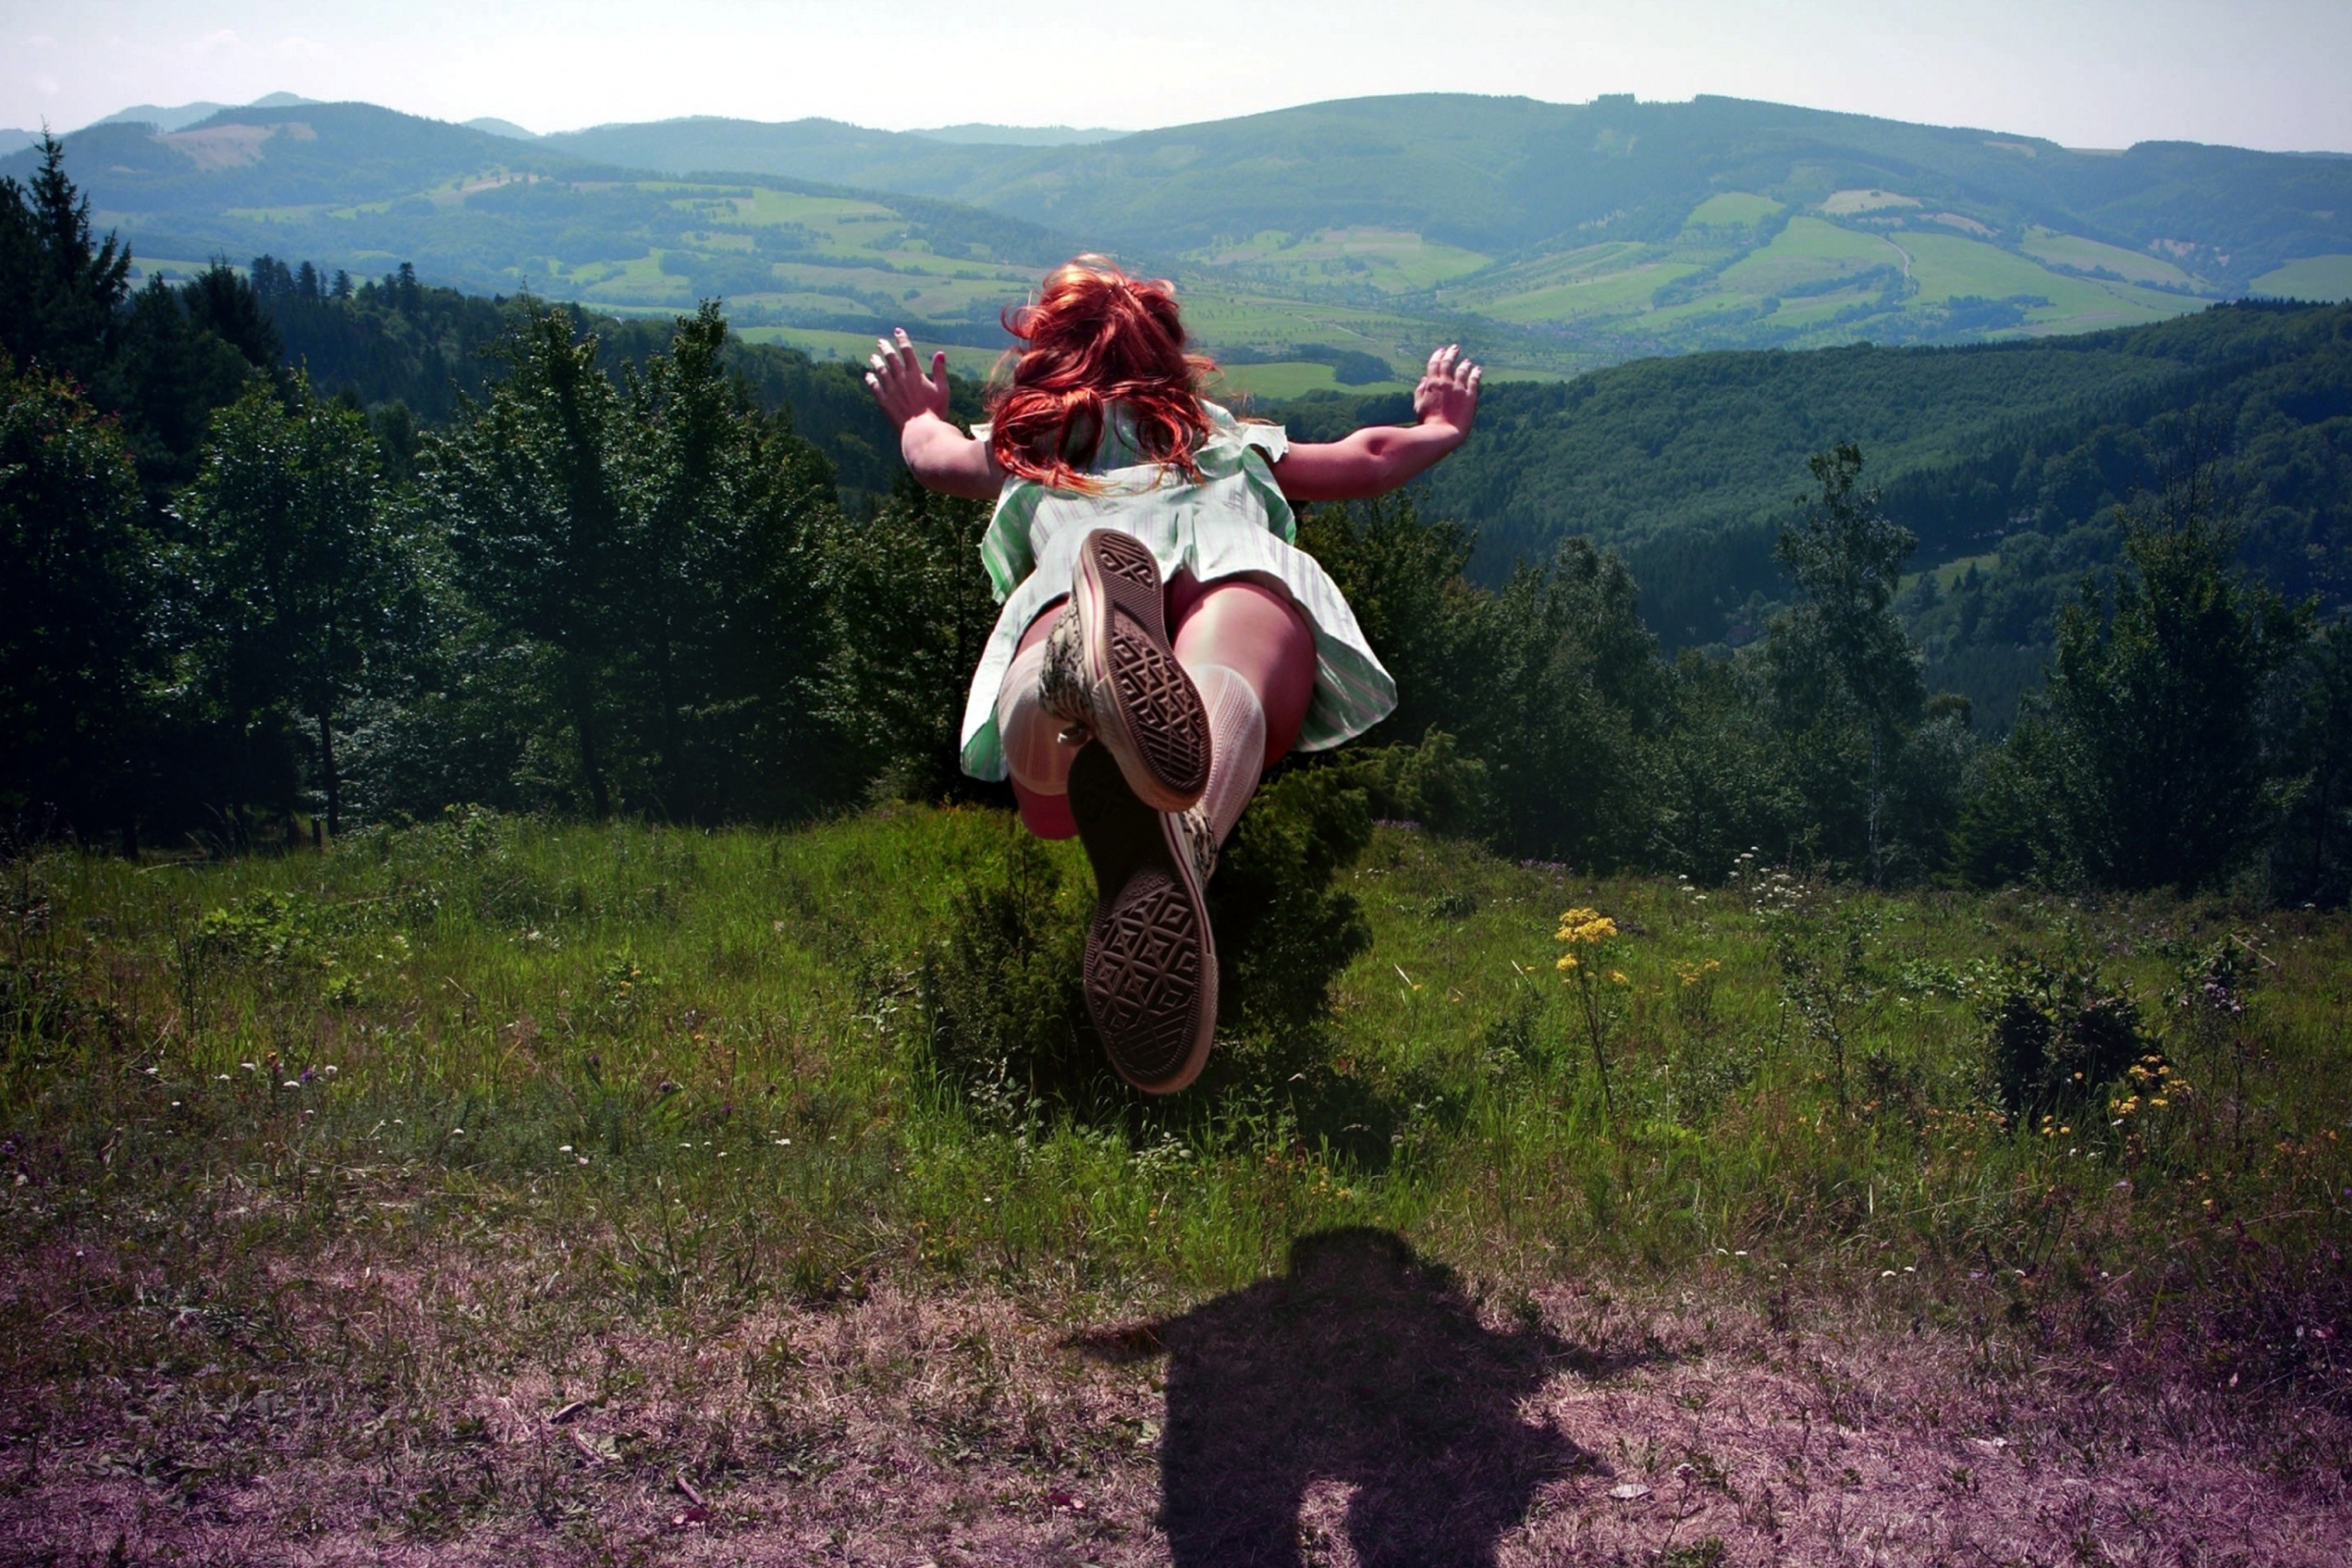 Идеи для фото в горах. Фотосессия в горах девушки. Необычные фотосессии в горах. Девушка в прыжке. Девушка на природе.